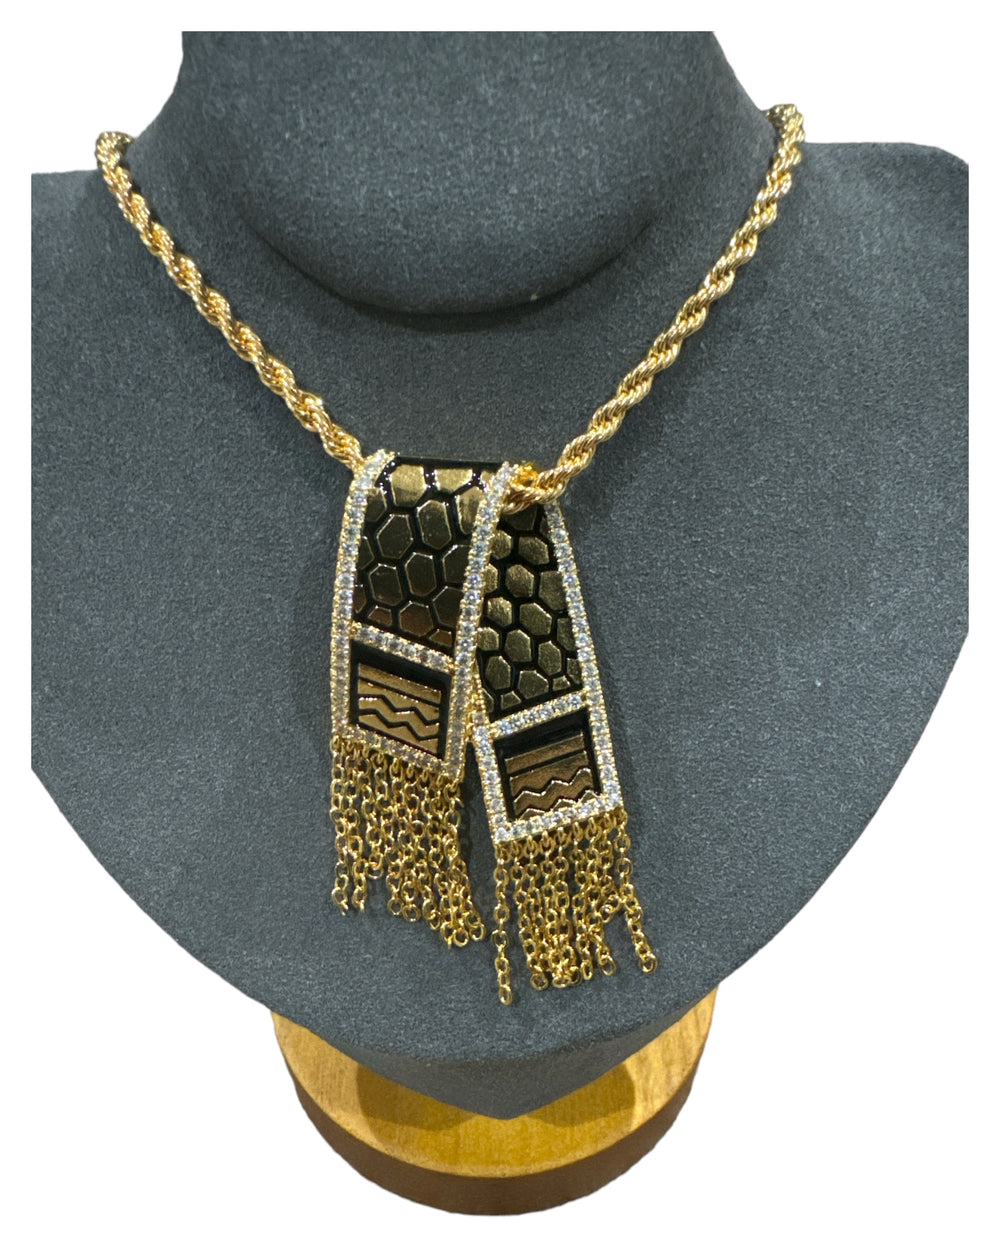 Elegance Reimagined: Golden Keffiyeh Necklace with Studded Crystals